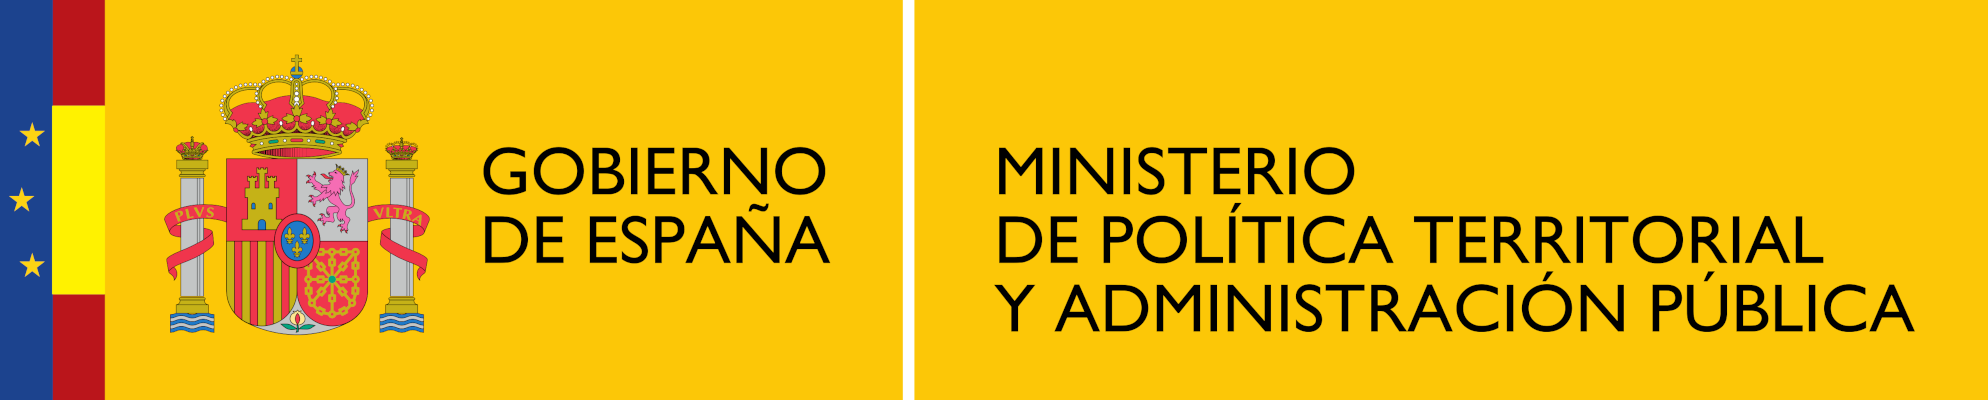 Ministerio Politica Territorial